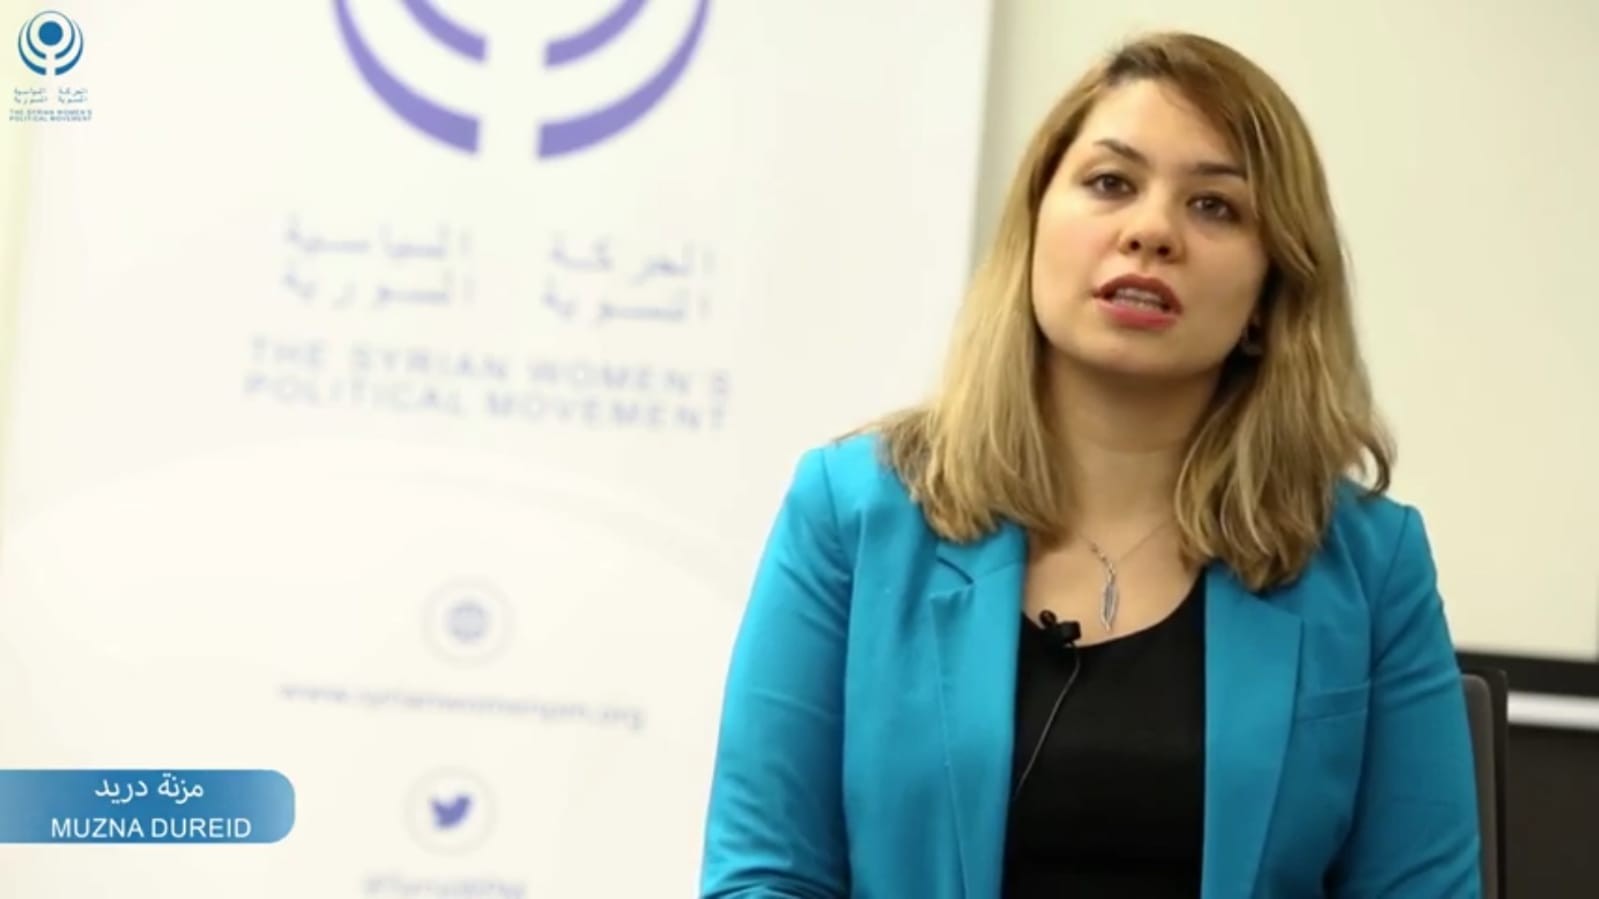 Muzna Dureid The Syrian Women’s Political Movement Member